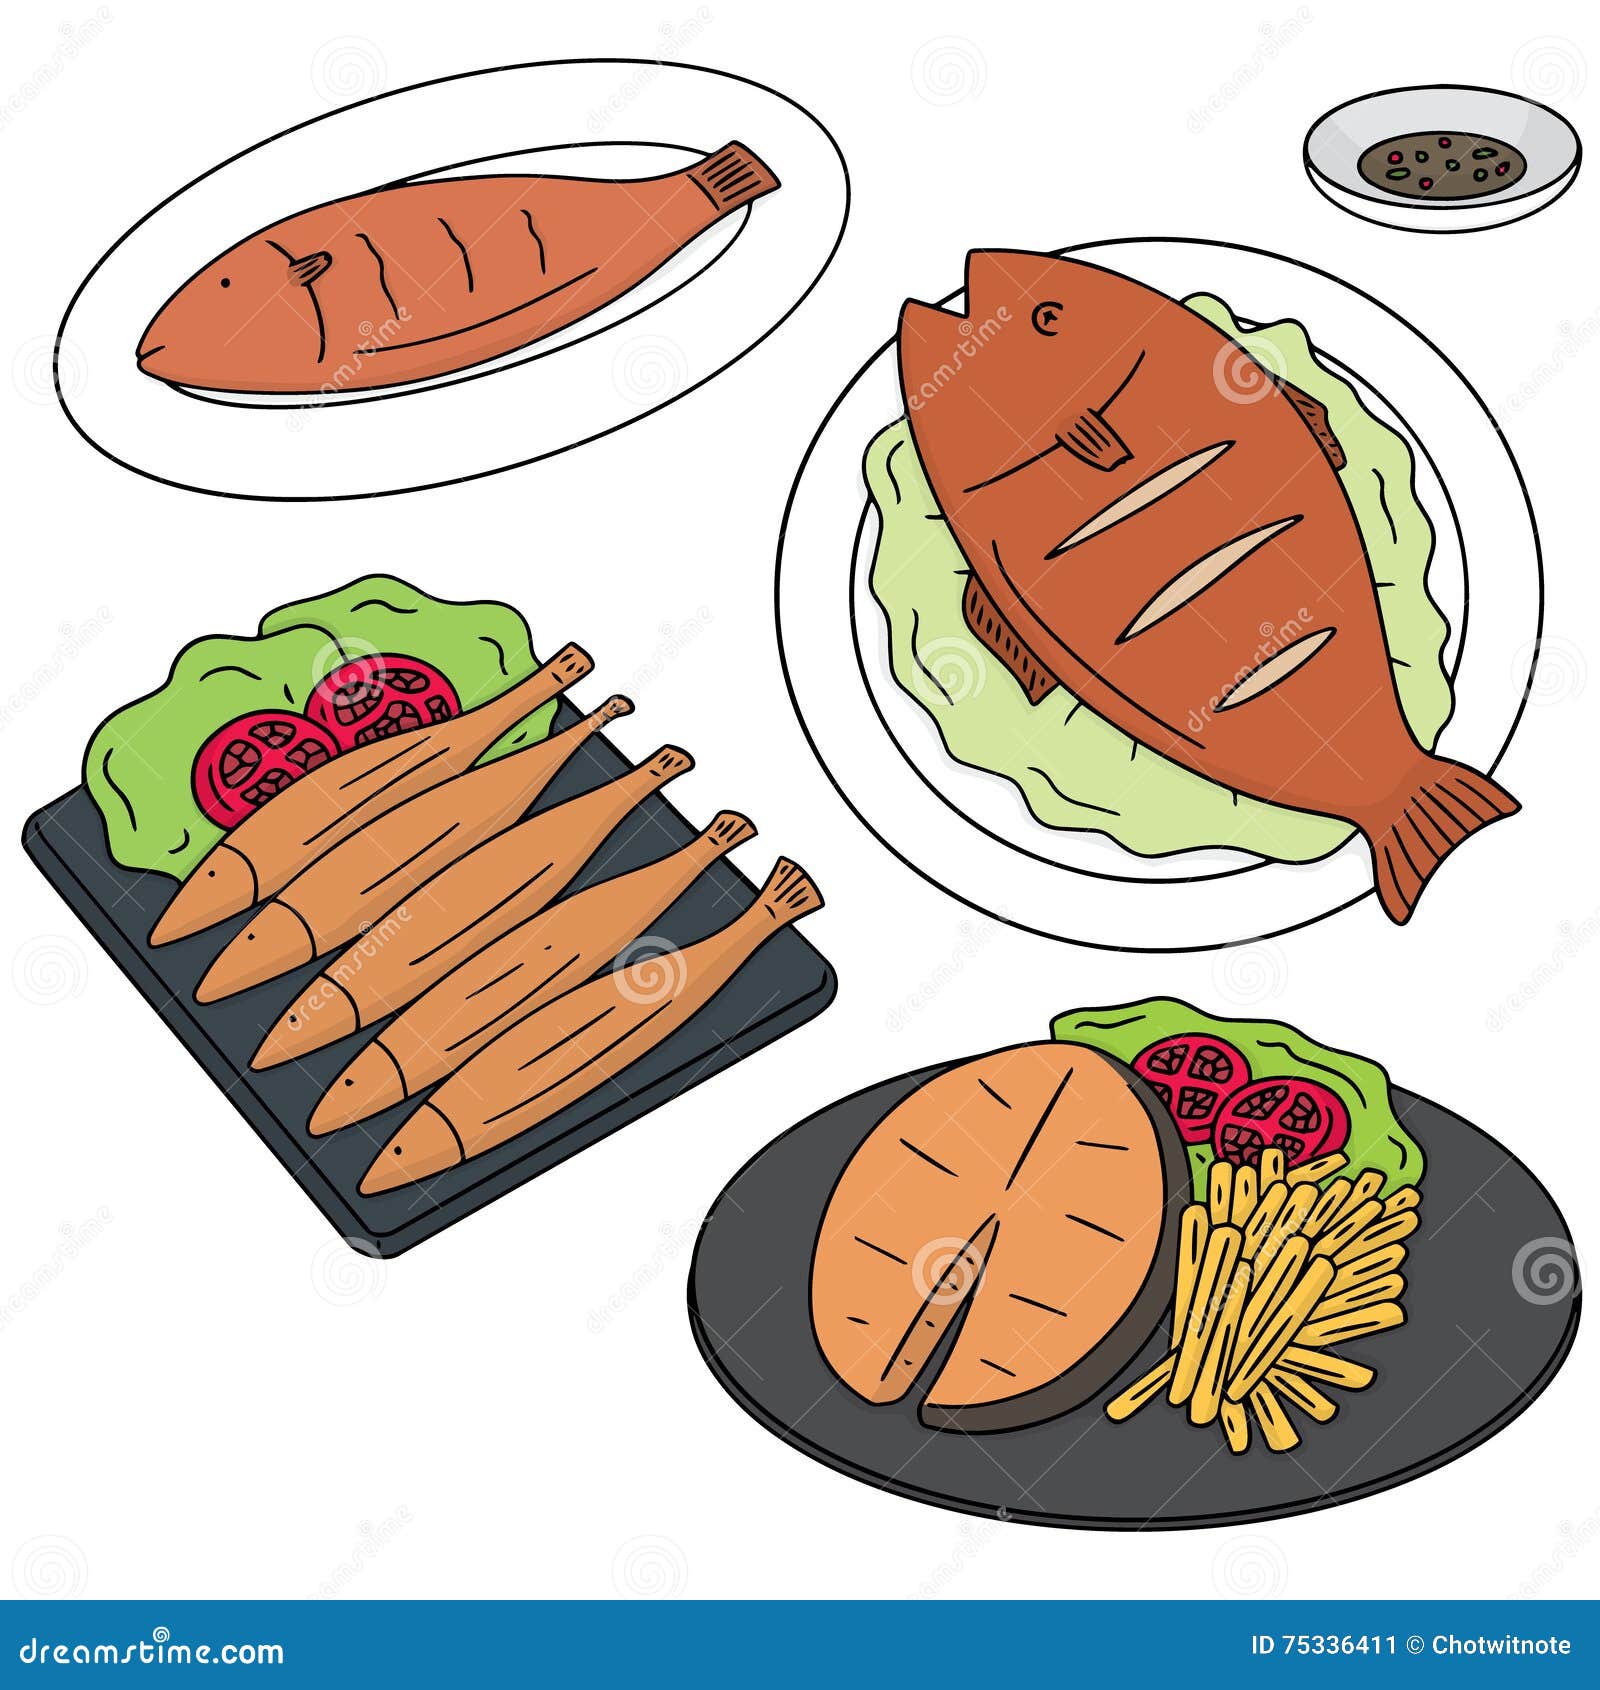 Fried fish stock vector. Illustration of fish, cartoon - 75336411